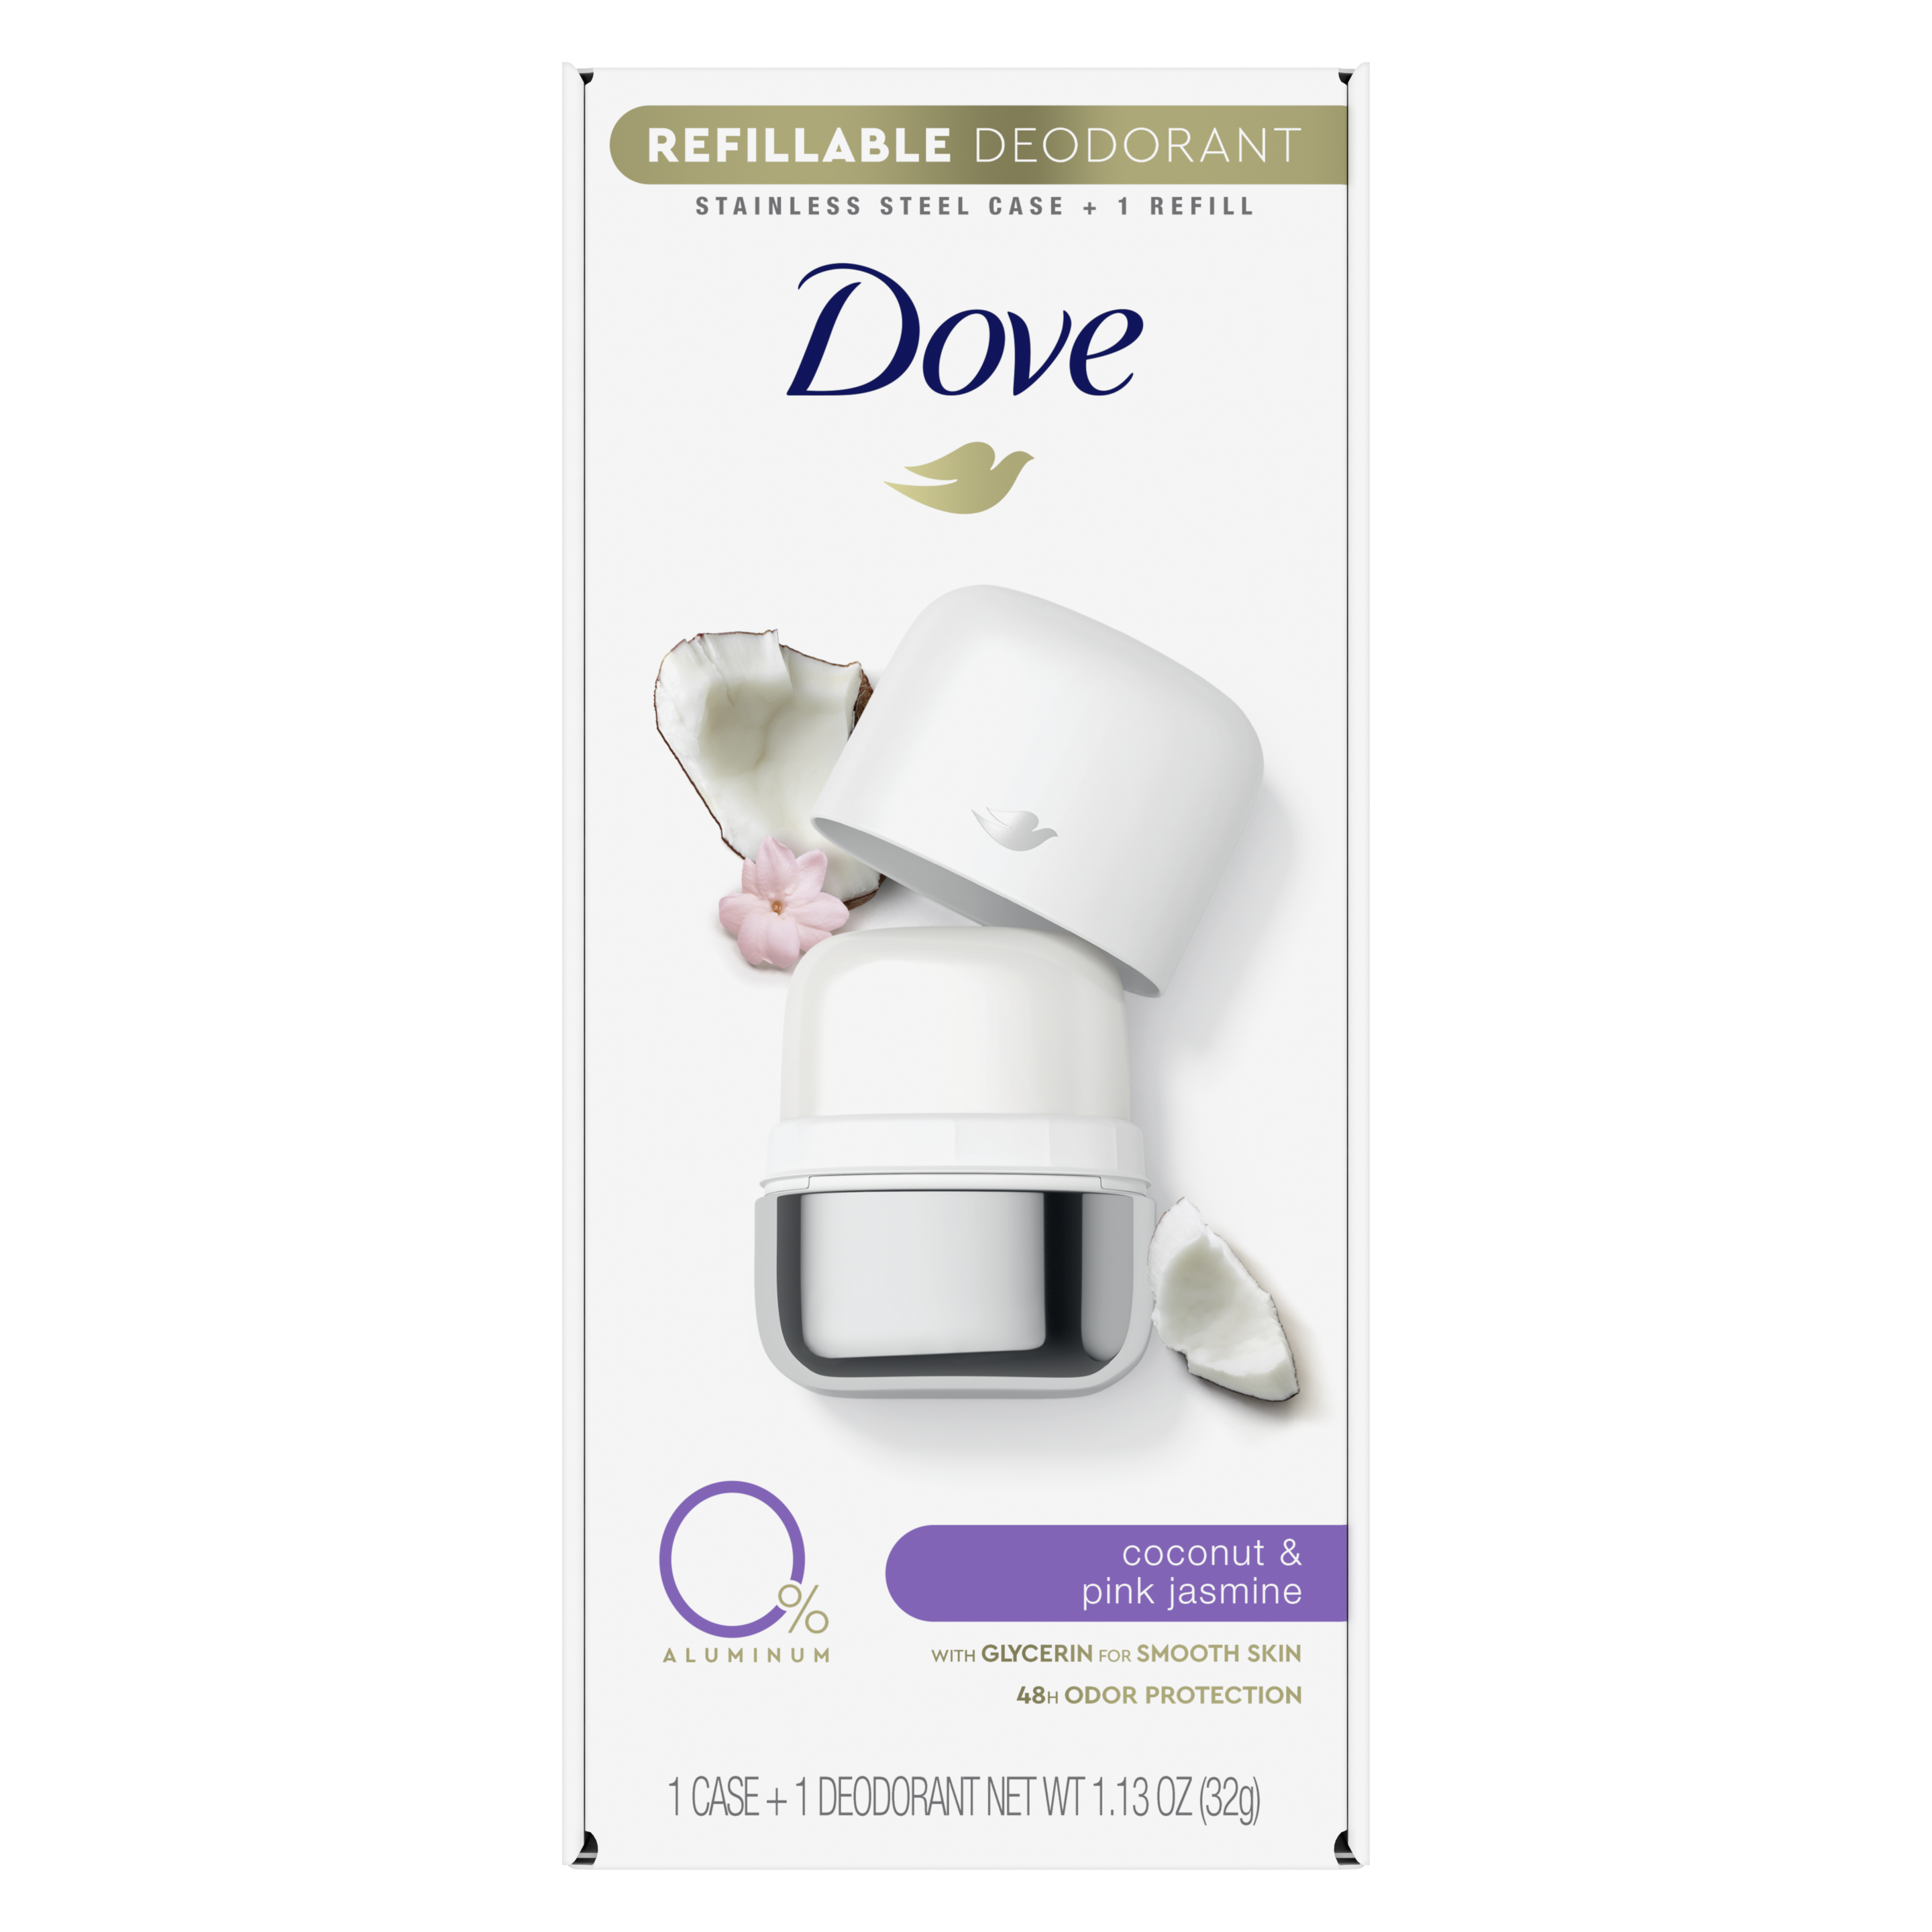 Dove Refillable Deodorant 0% Aluminum Coconut & Pink Jasmine Starter Kit